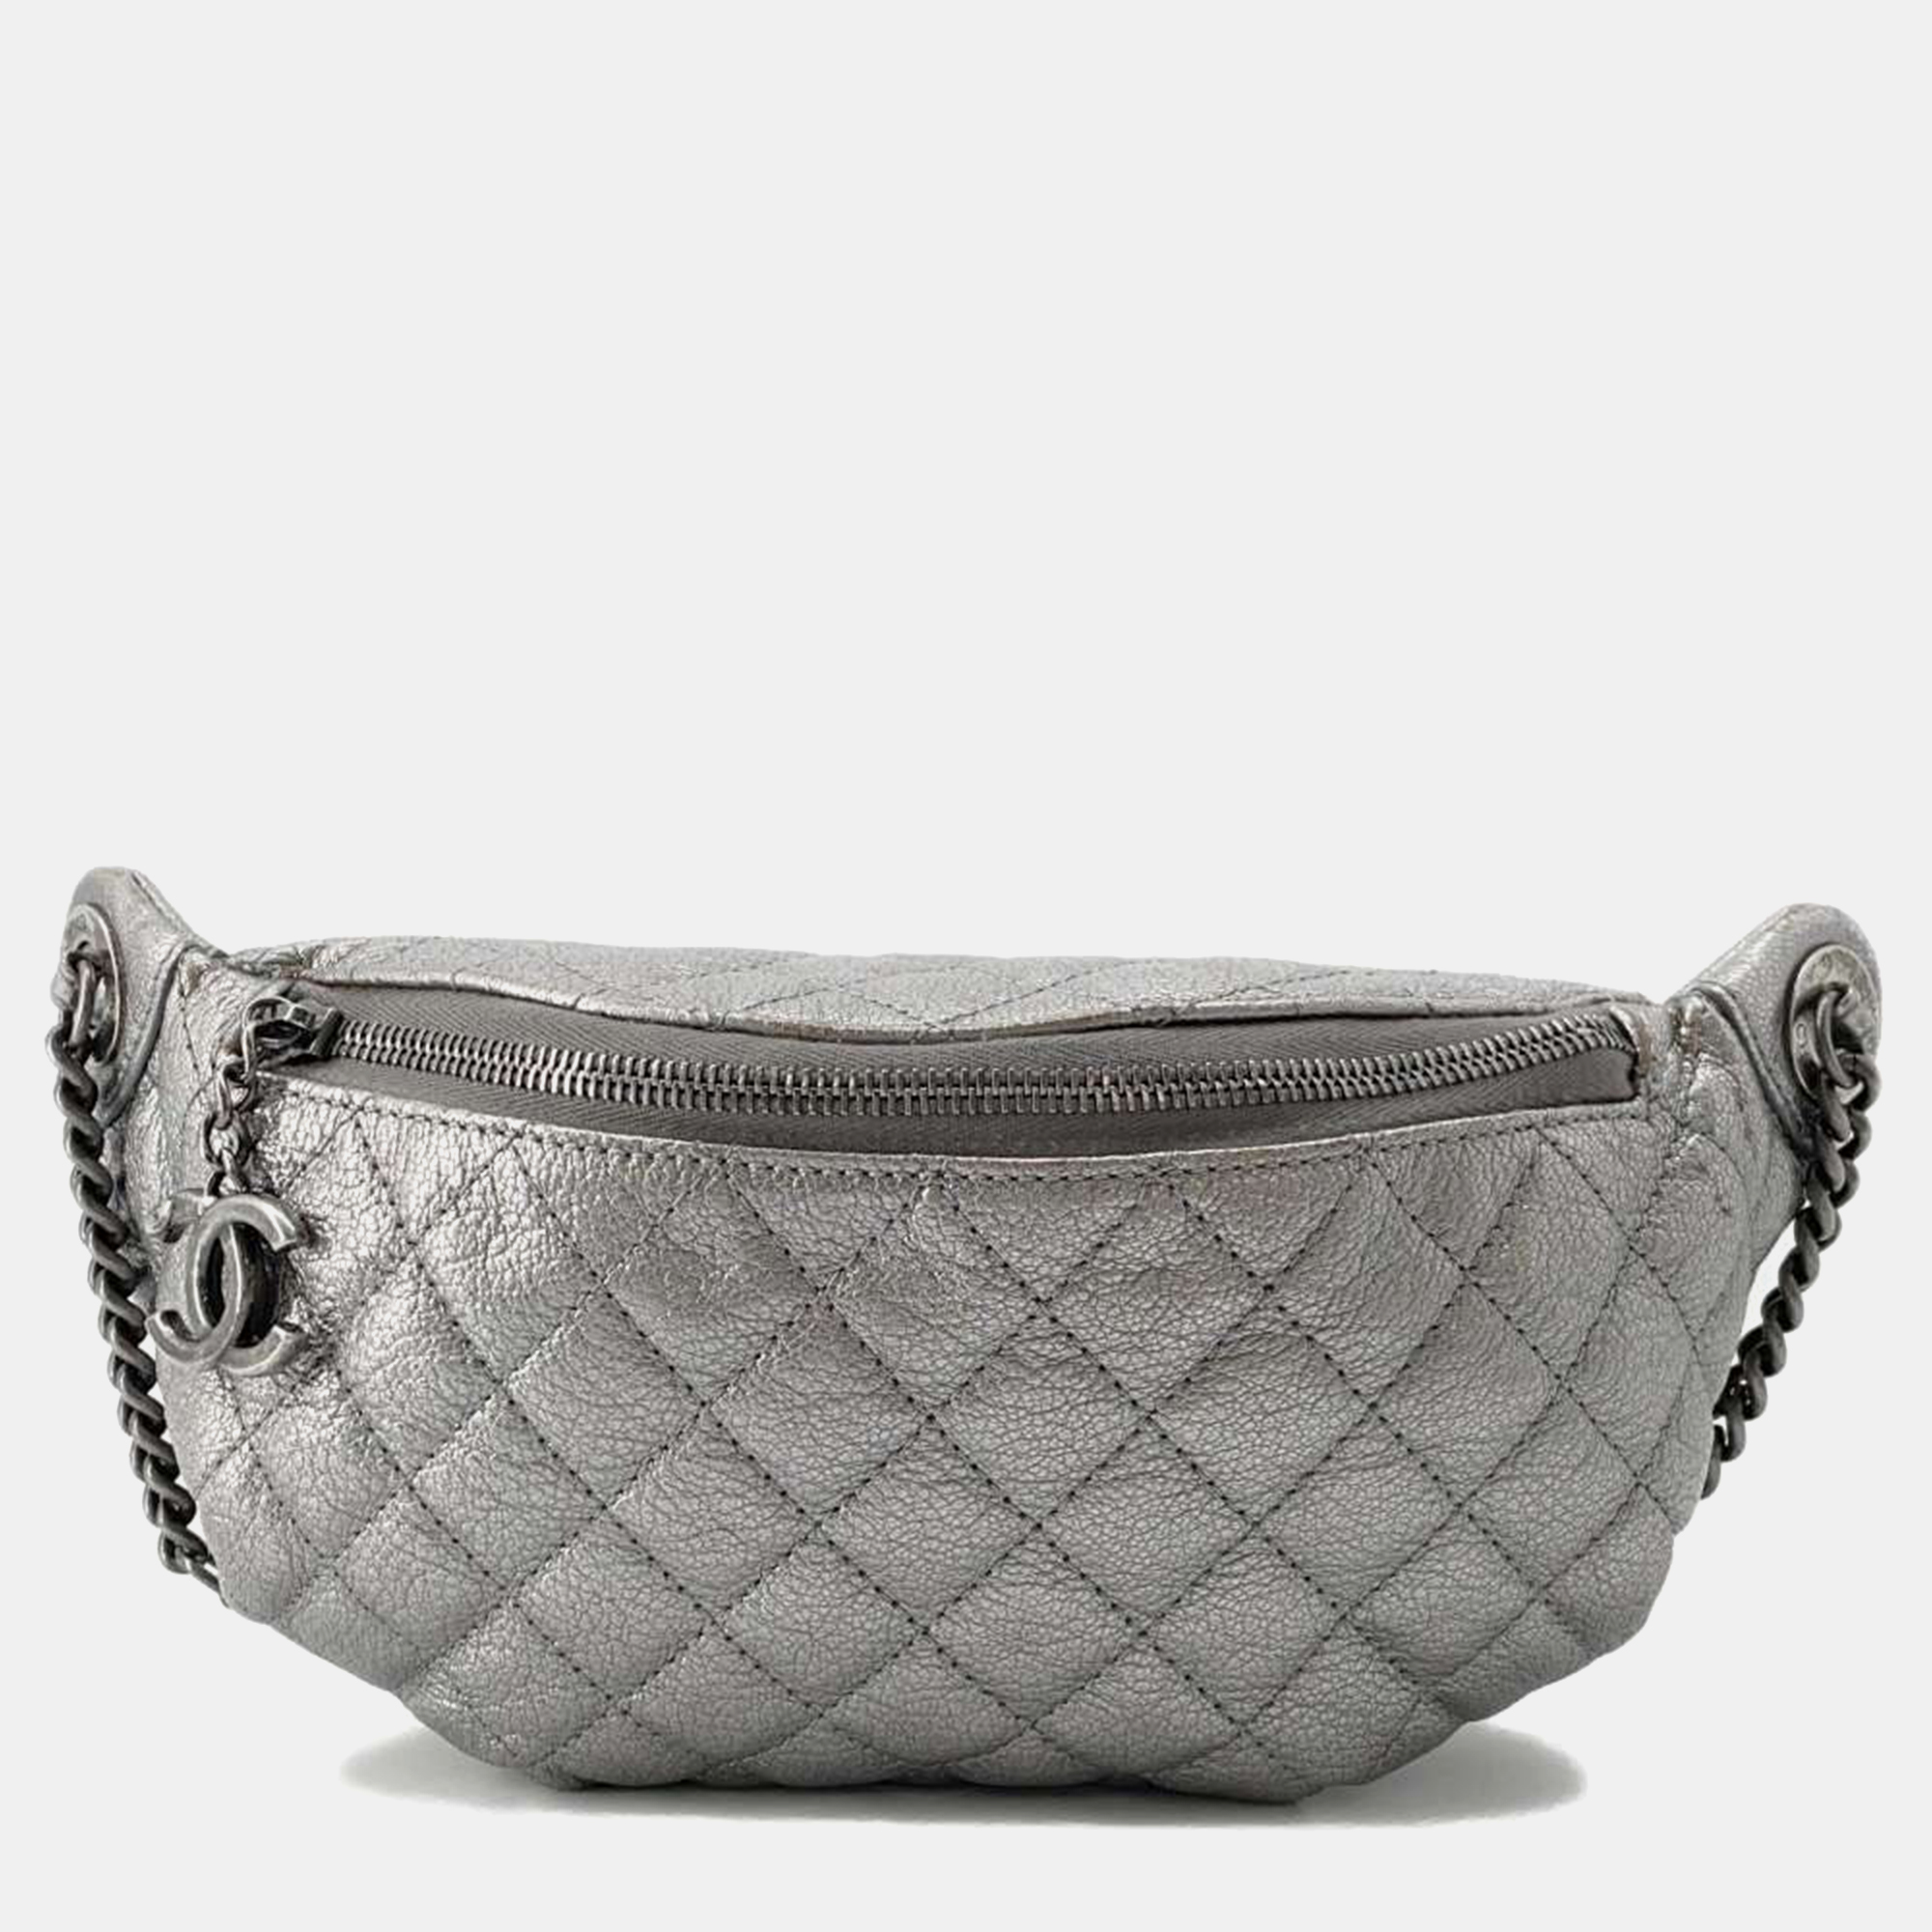 Chanel silver leather cc belt bag